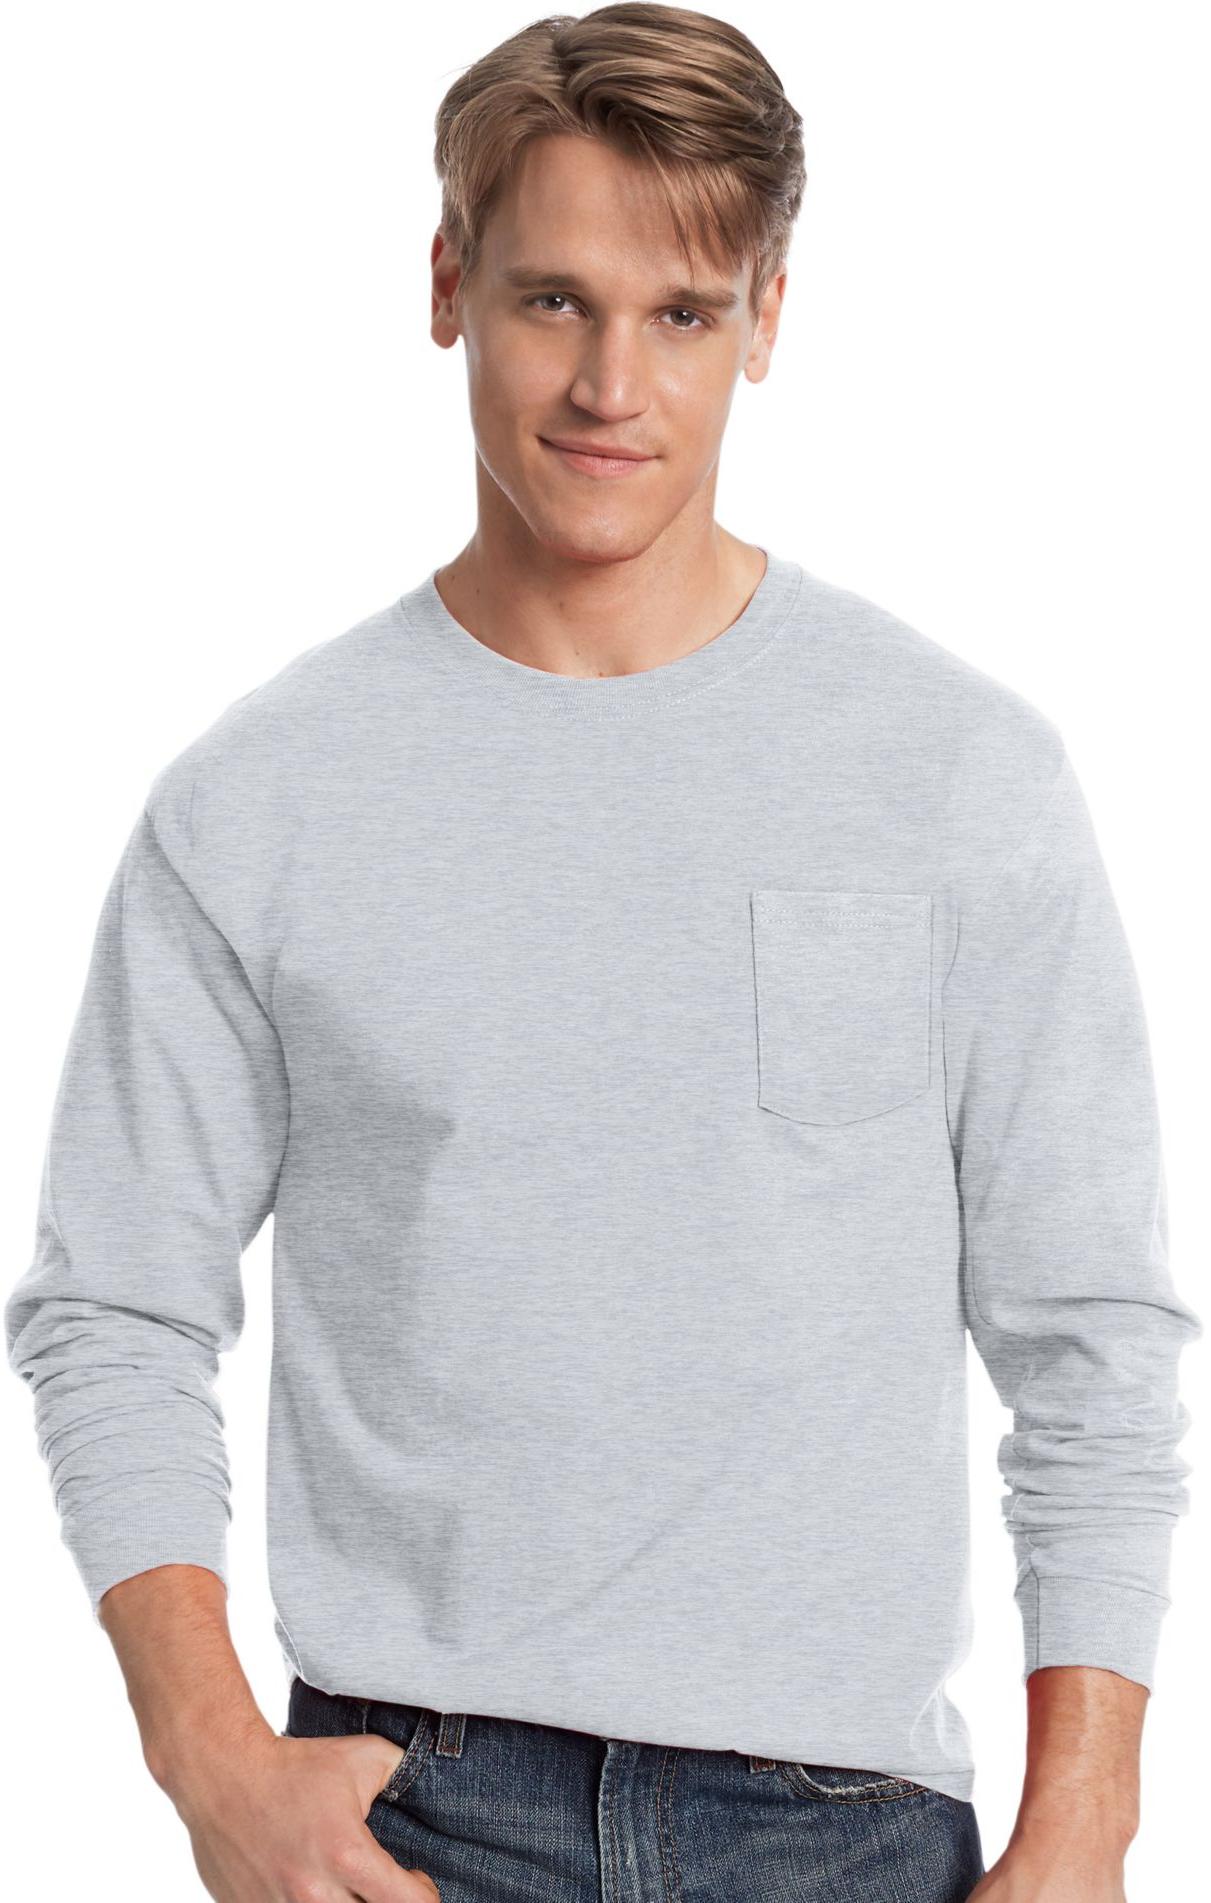 HANES Men's TAGLESS Long-Sleeve T-Shirt with Pocket - 5596 | eBay